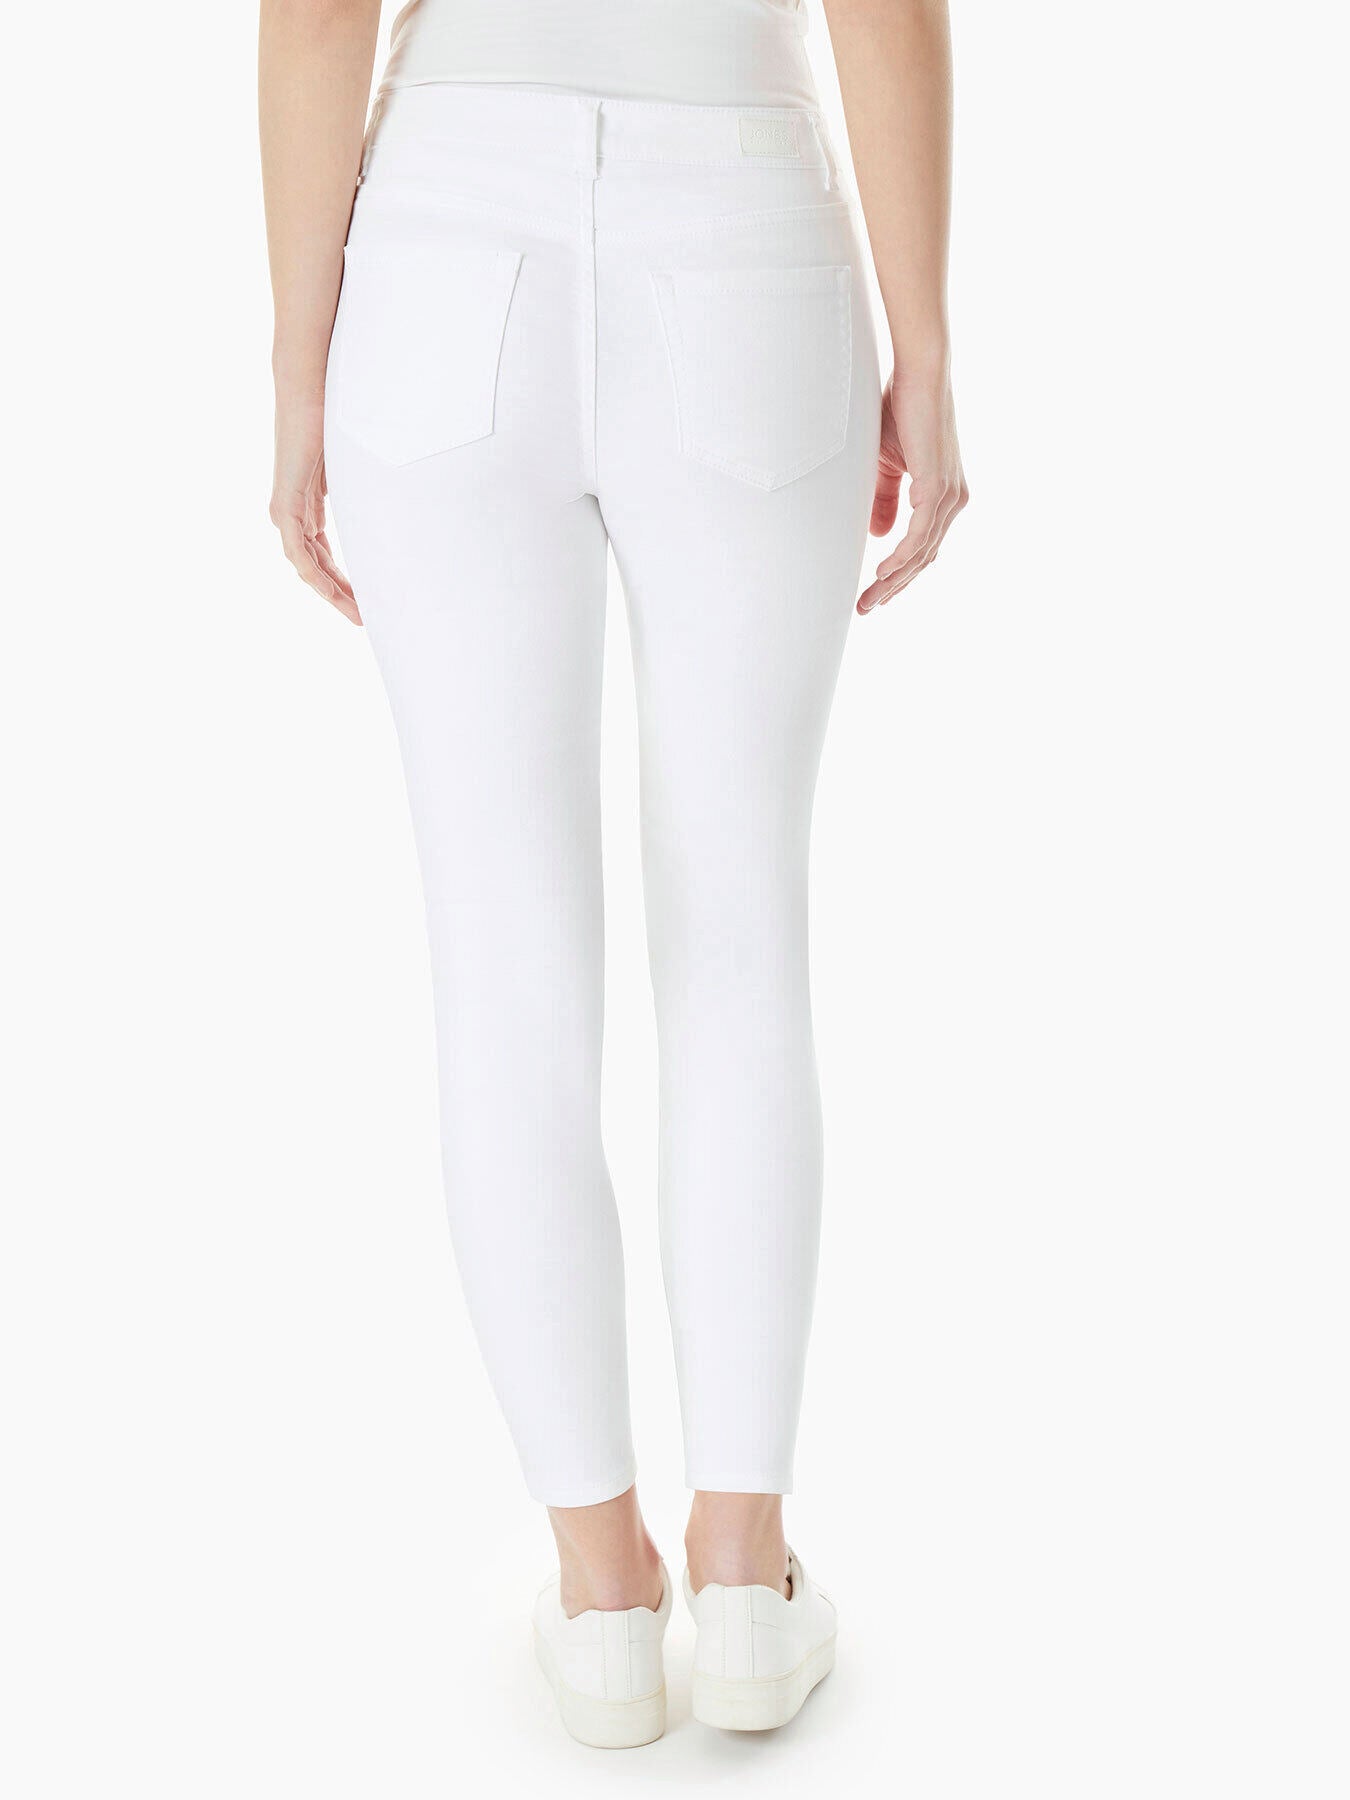 Lexington Skinny Jeans - White Skinny Jeans | Jones New York